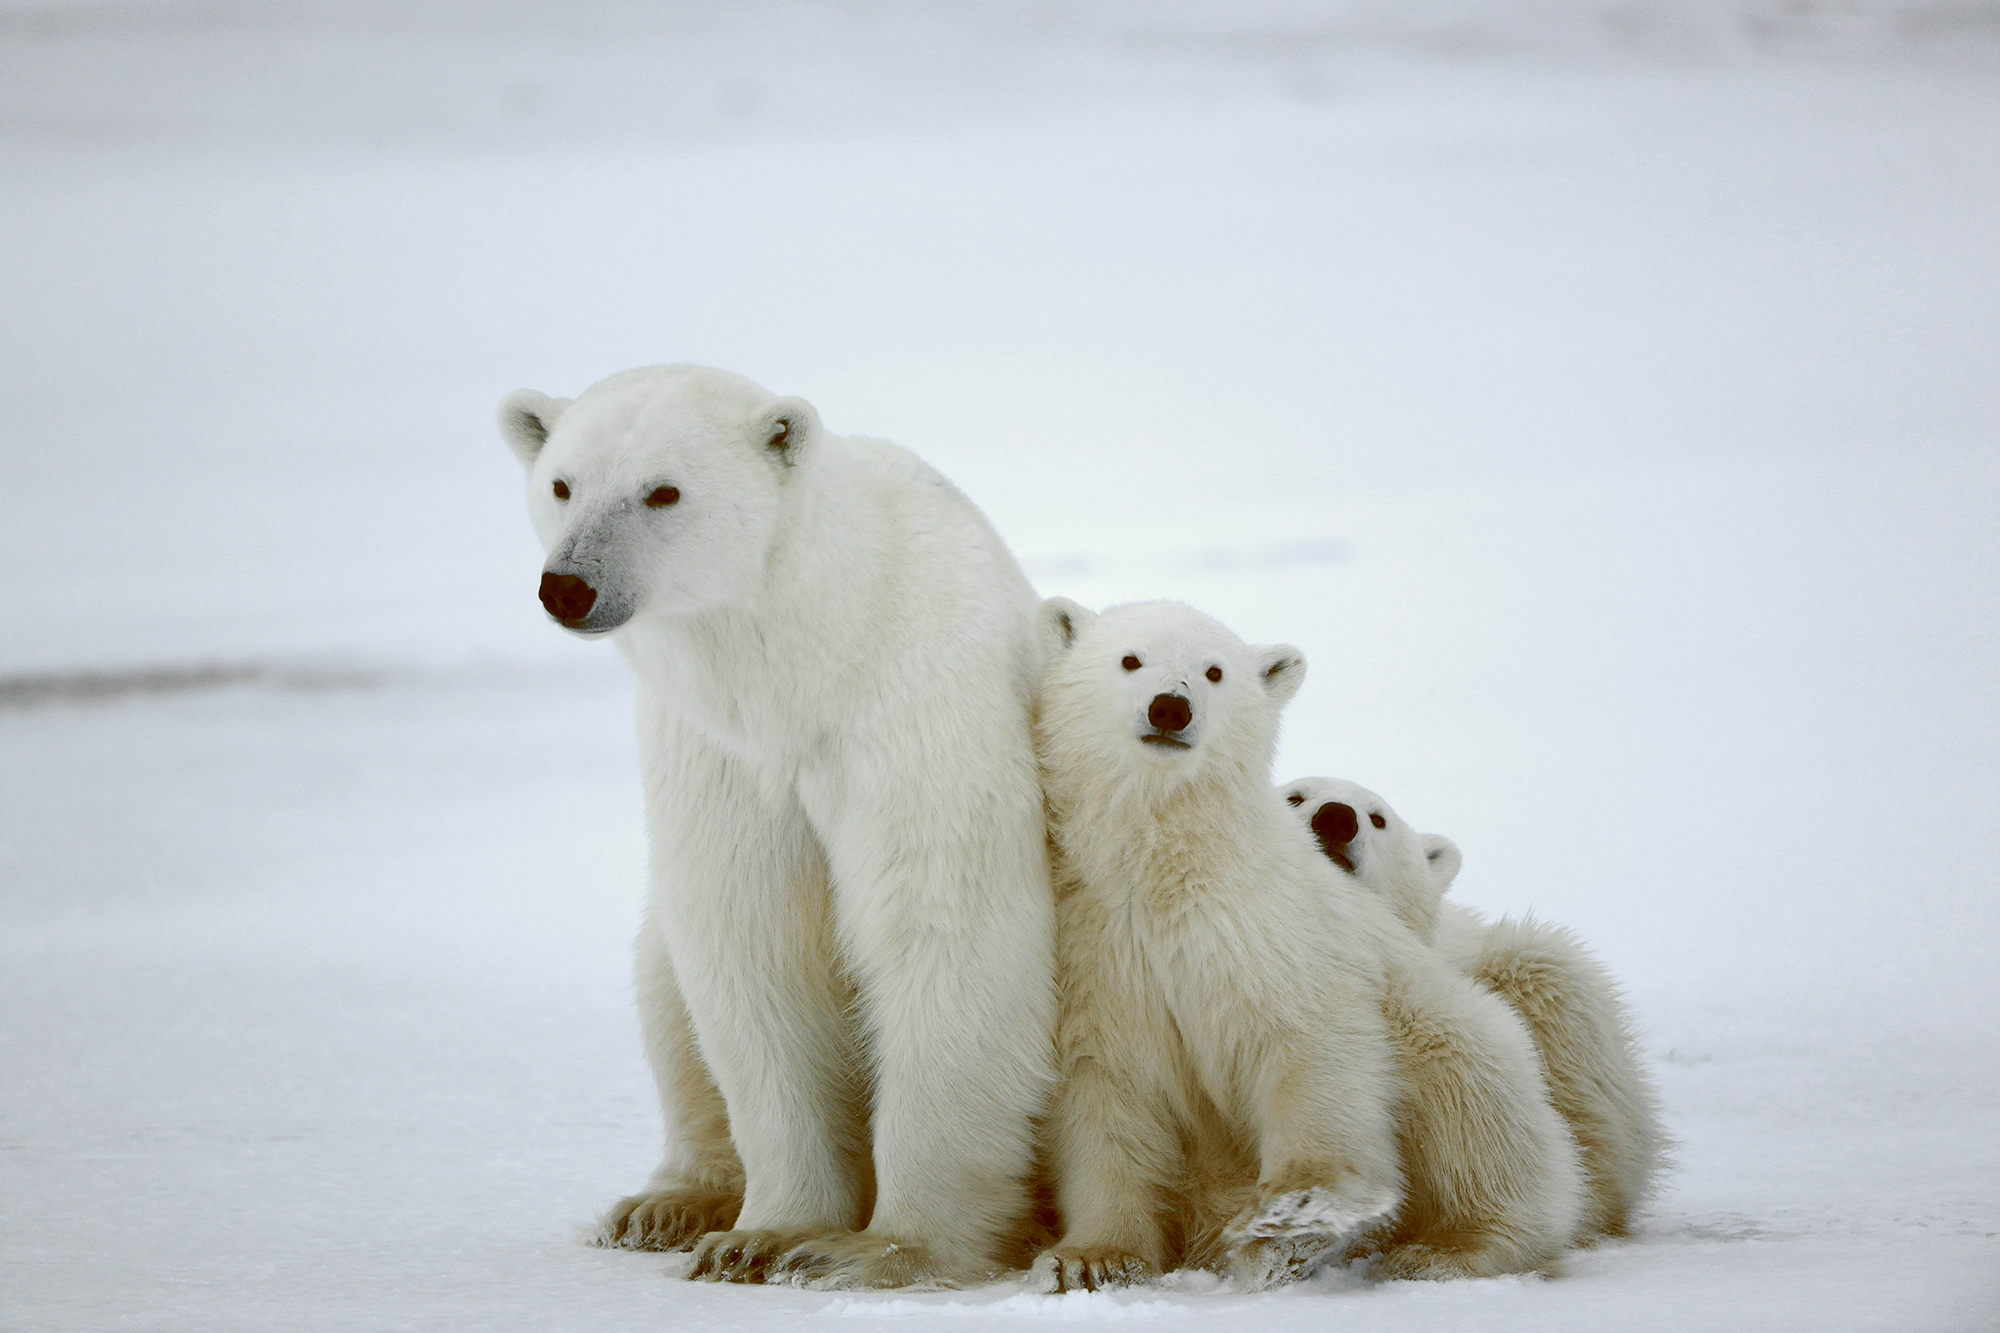 Polar she-bear with cubs. The polar she-bear with two kids on snow-covered coast.